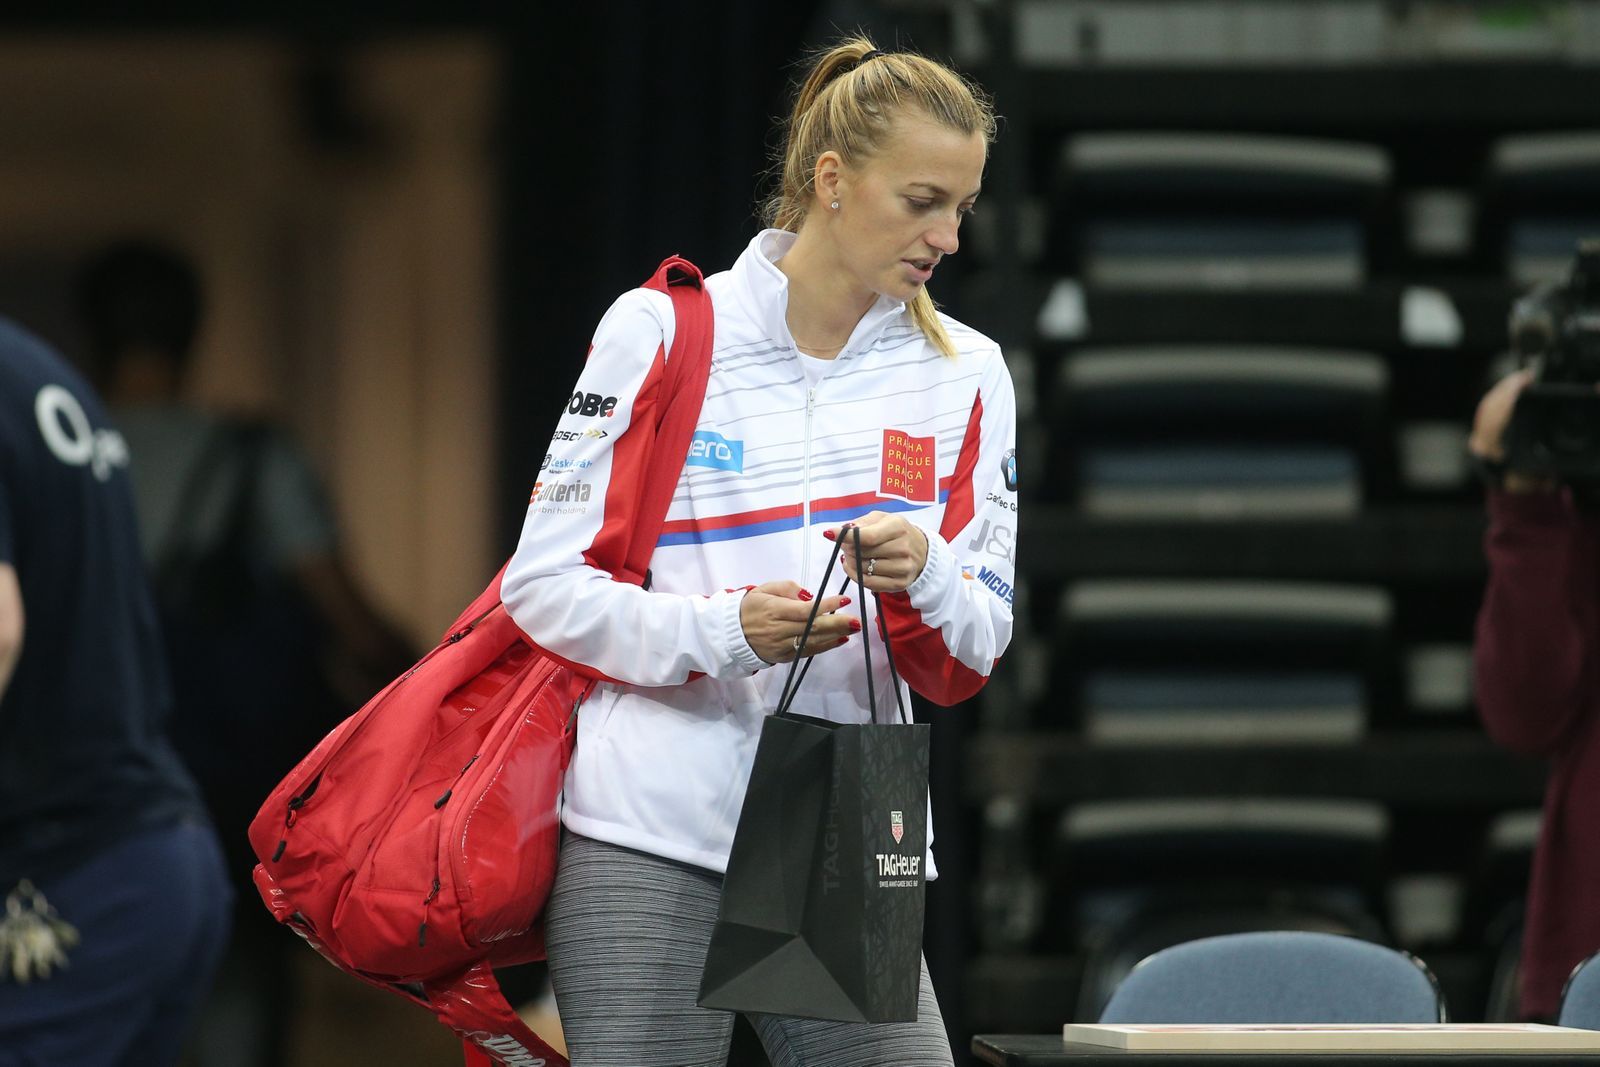 Petra Kvitová před finále Fed Cupu 2018